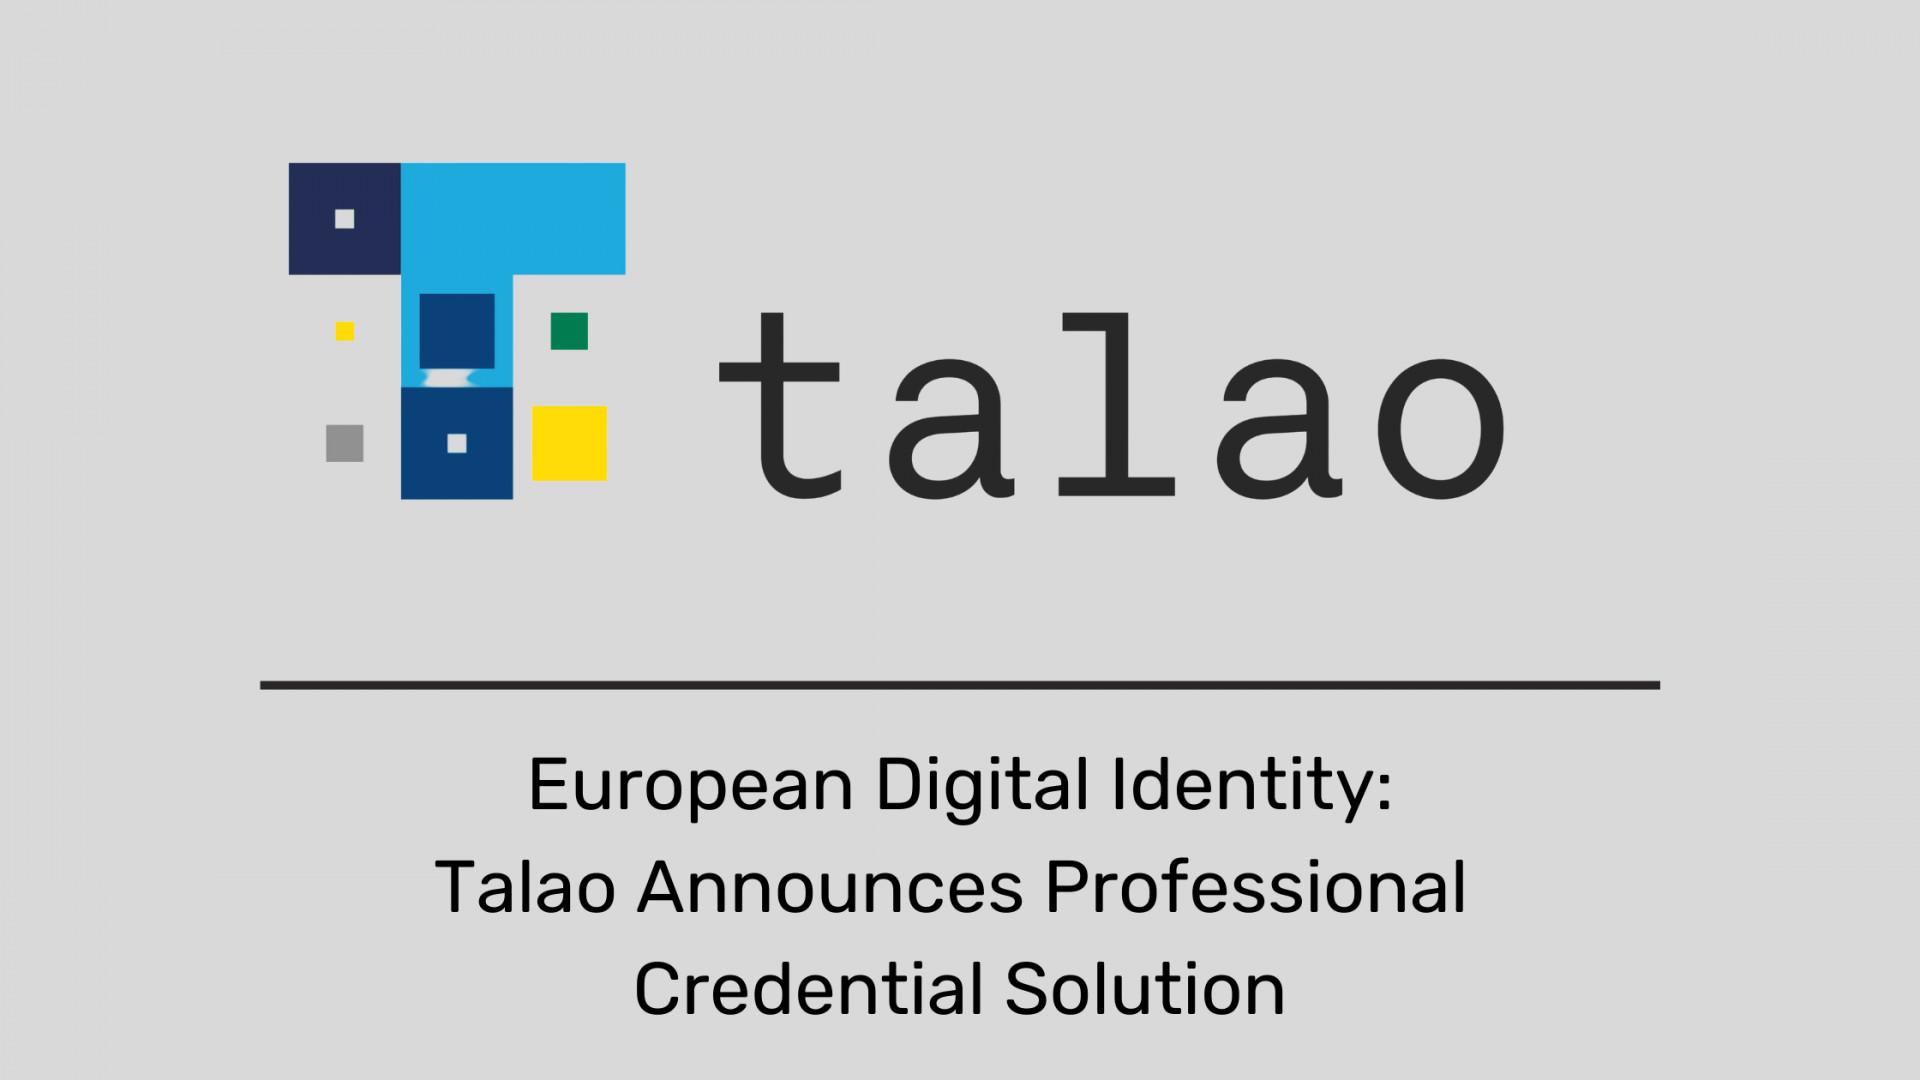 European Digital Identity: Talao Announces Professional Credential Solution